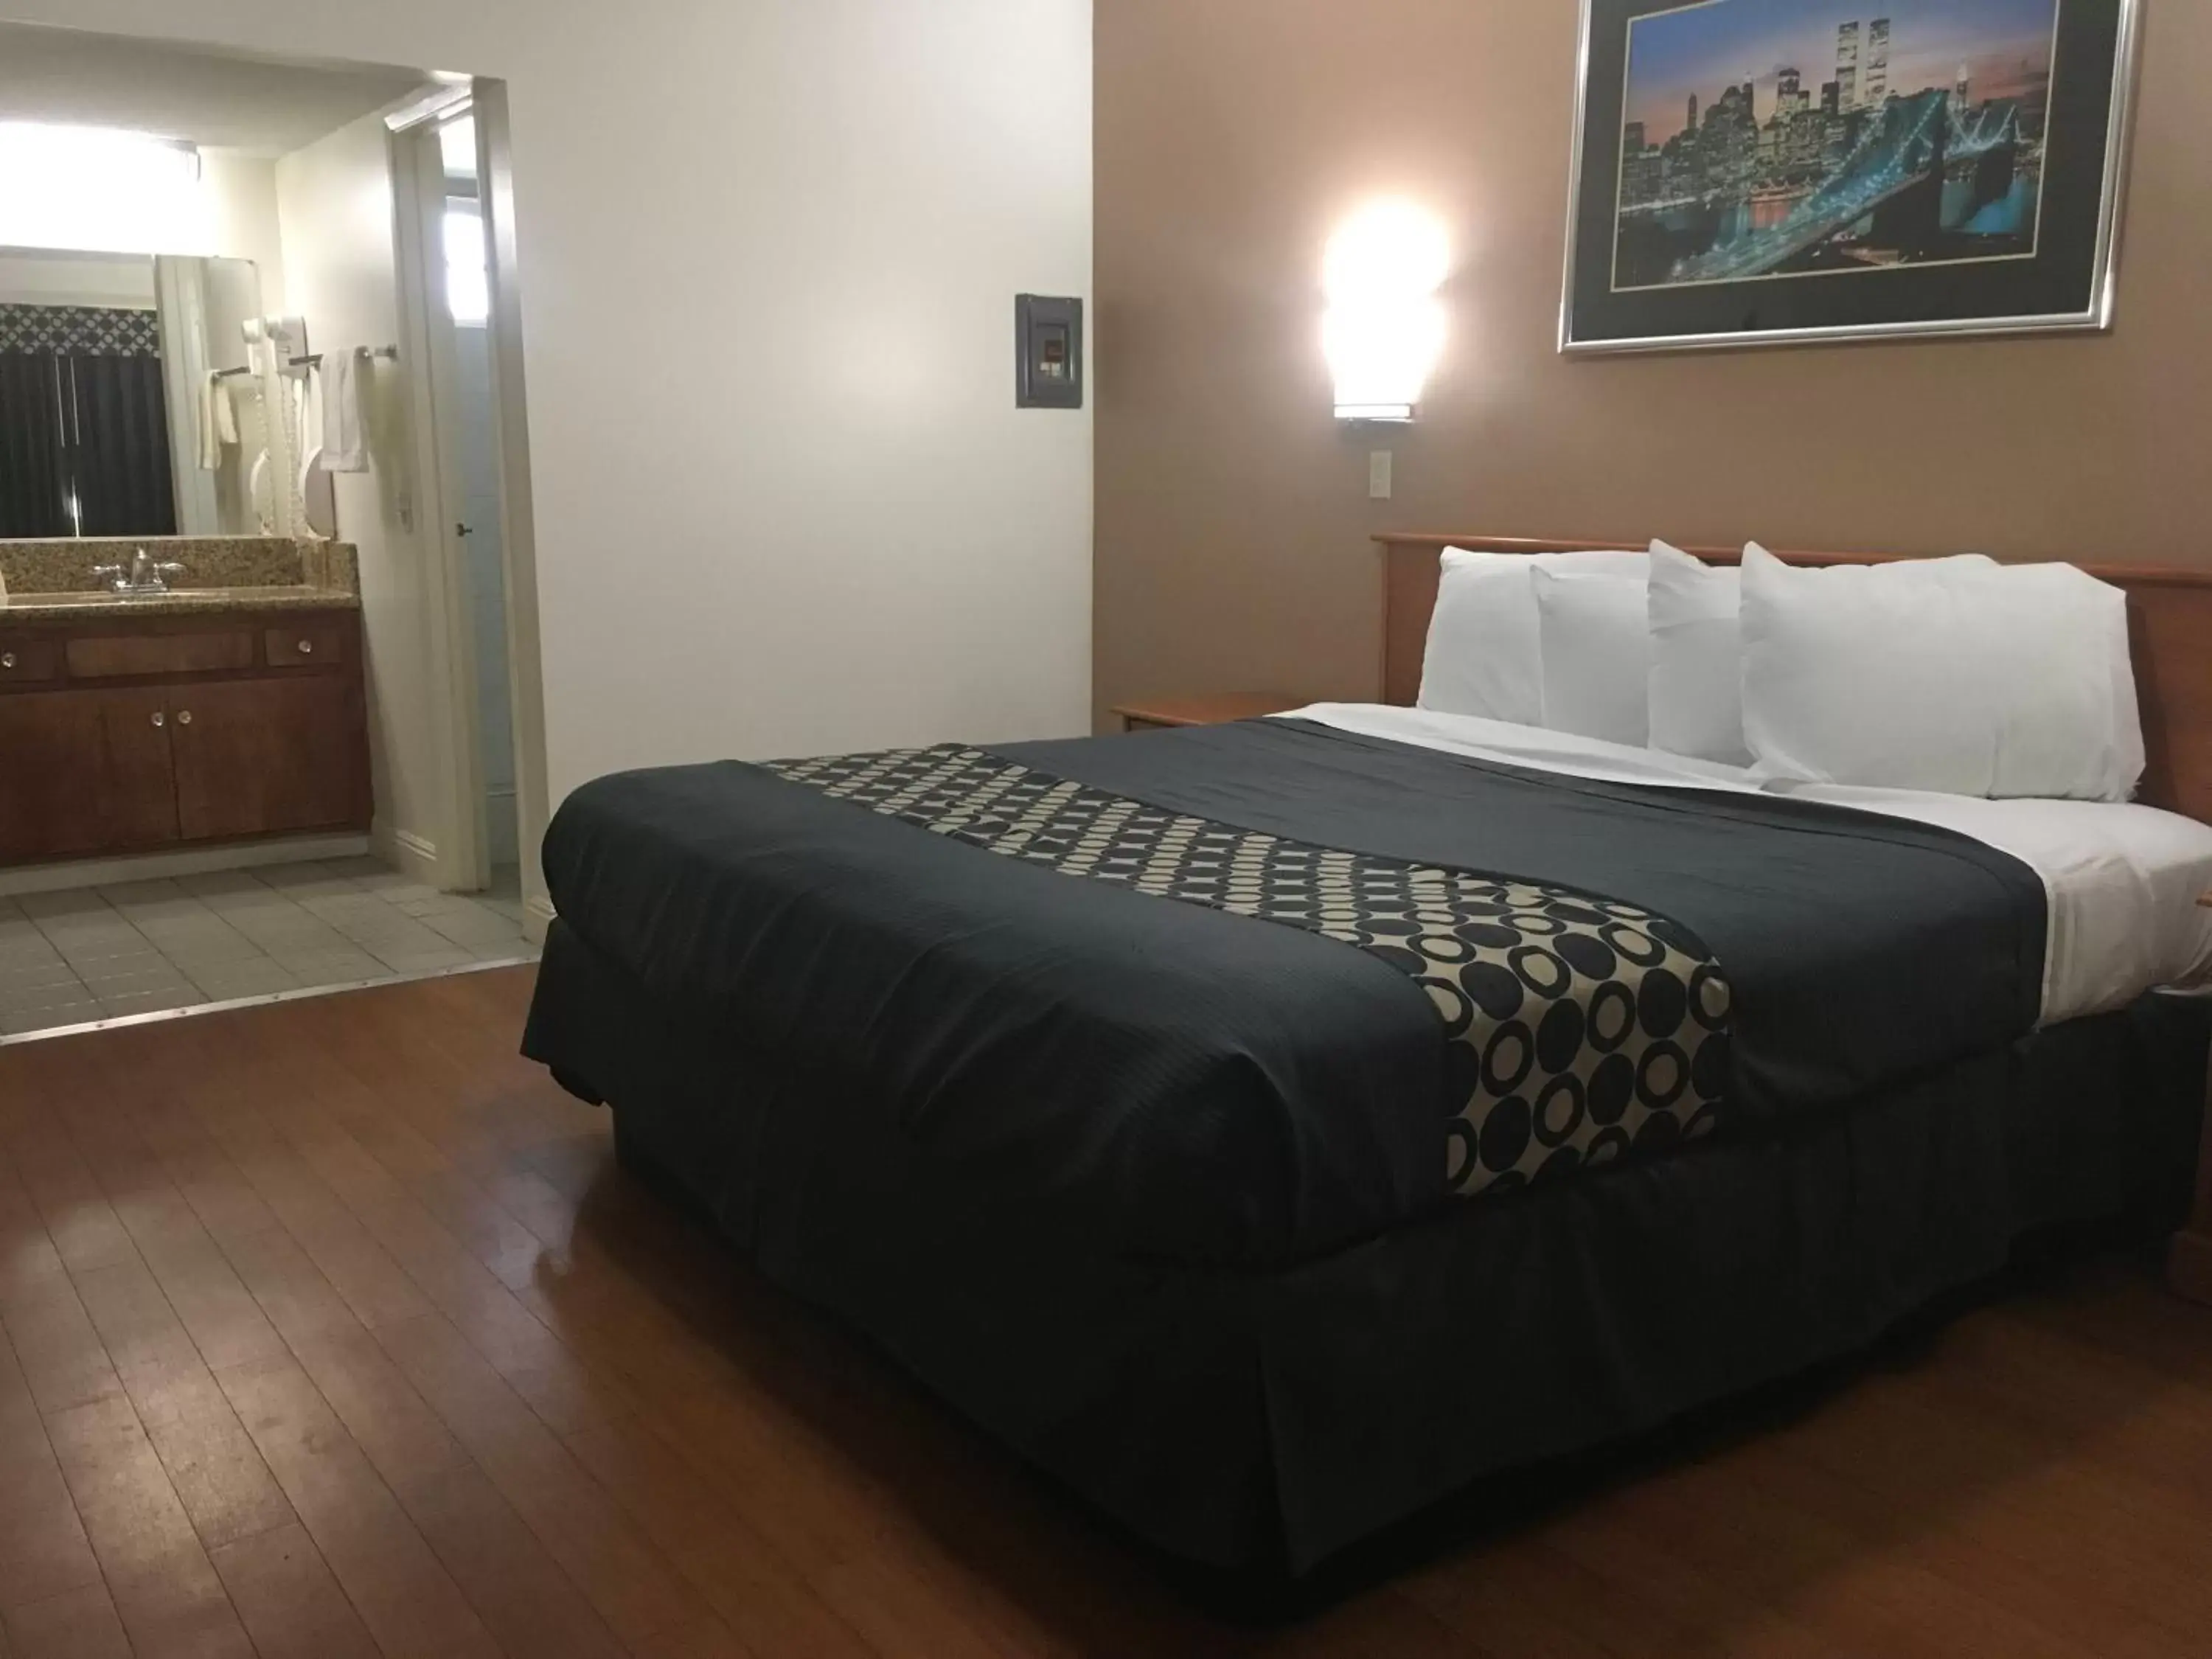 Bed in Americas Best Value Inn Beaumont California